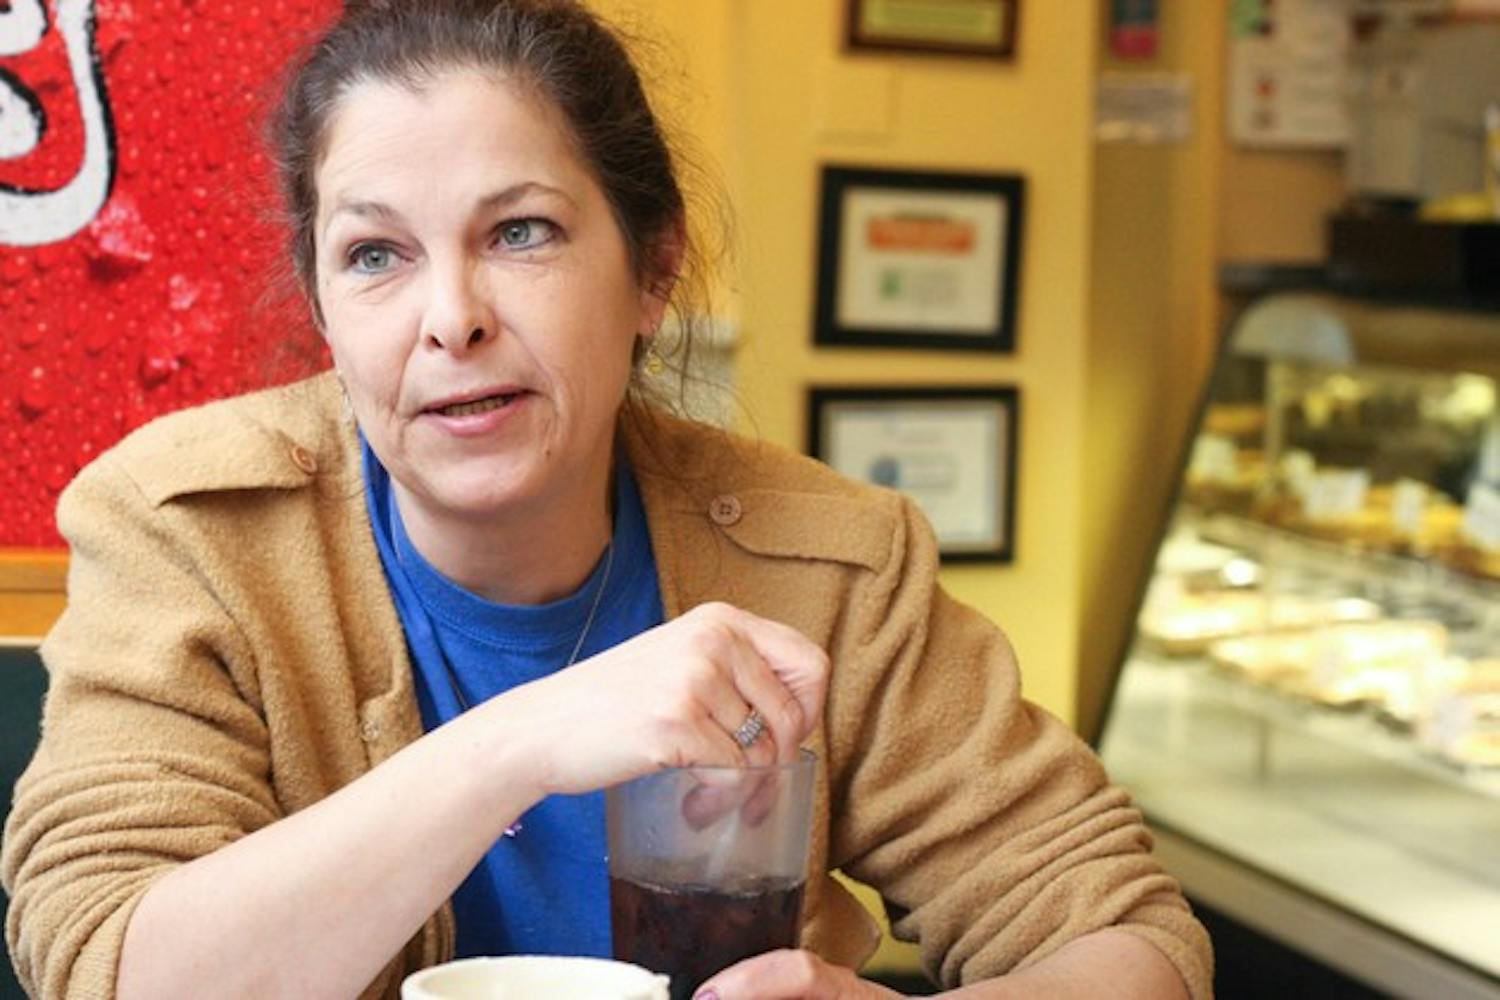 Becky Schneider has been working as a waitress at Lou's since 1978.